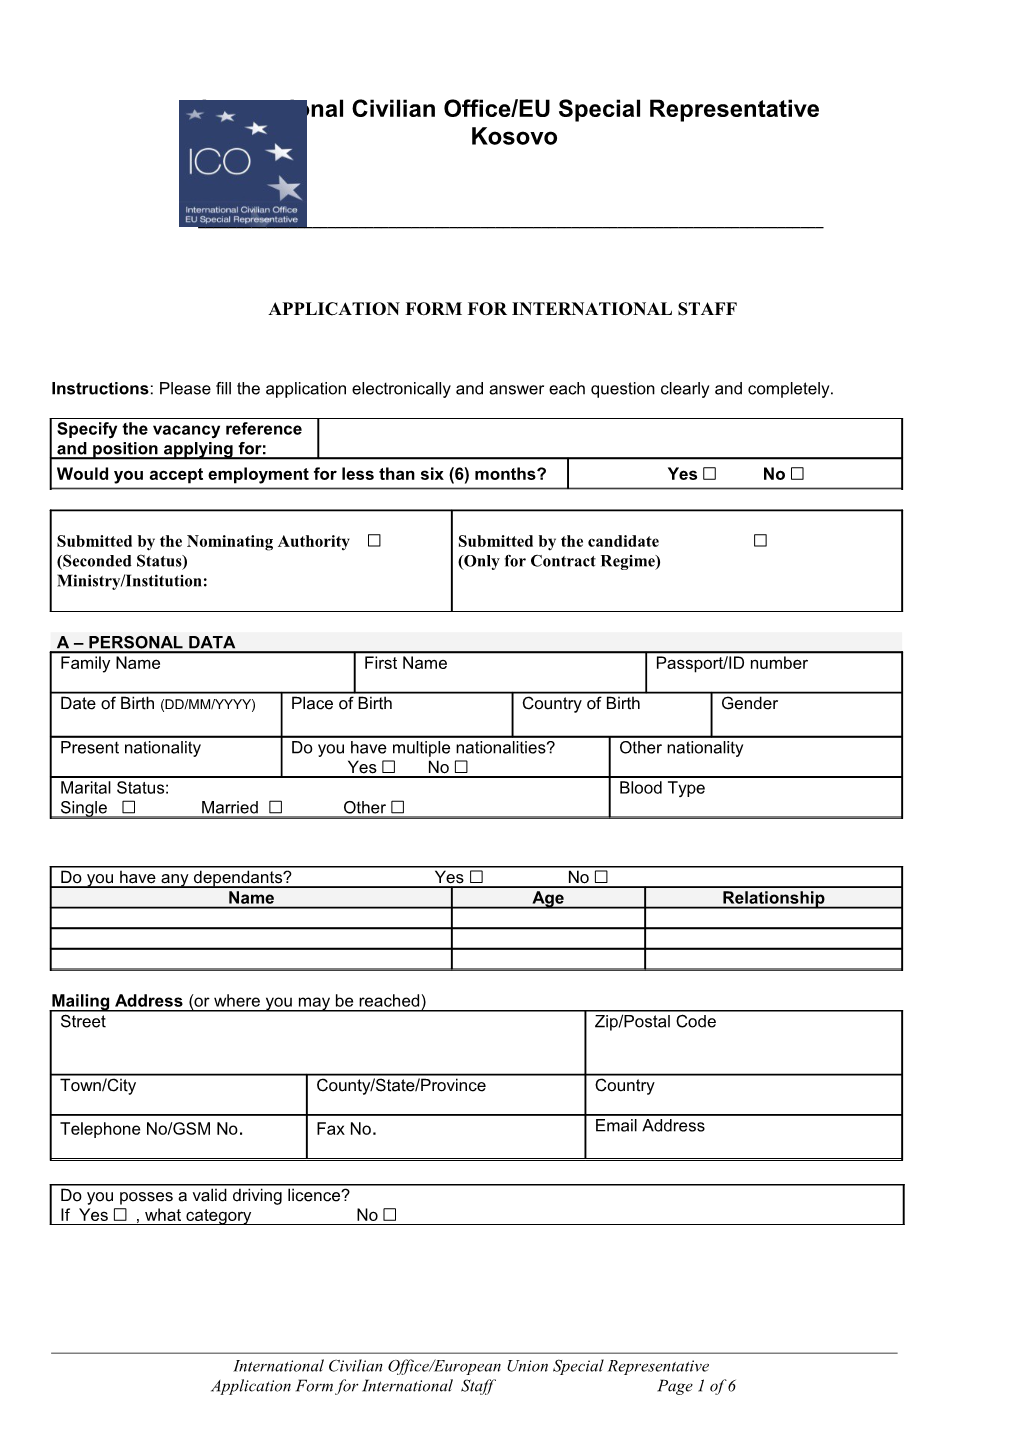 Application Form for International Staff